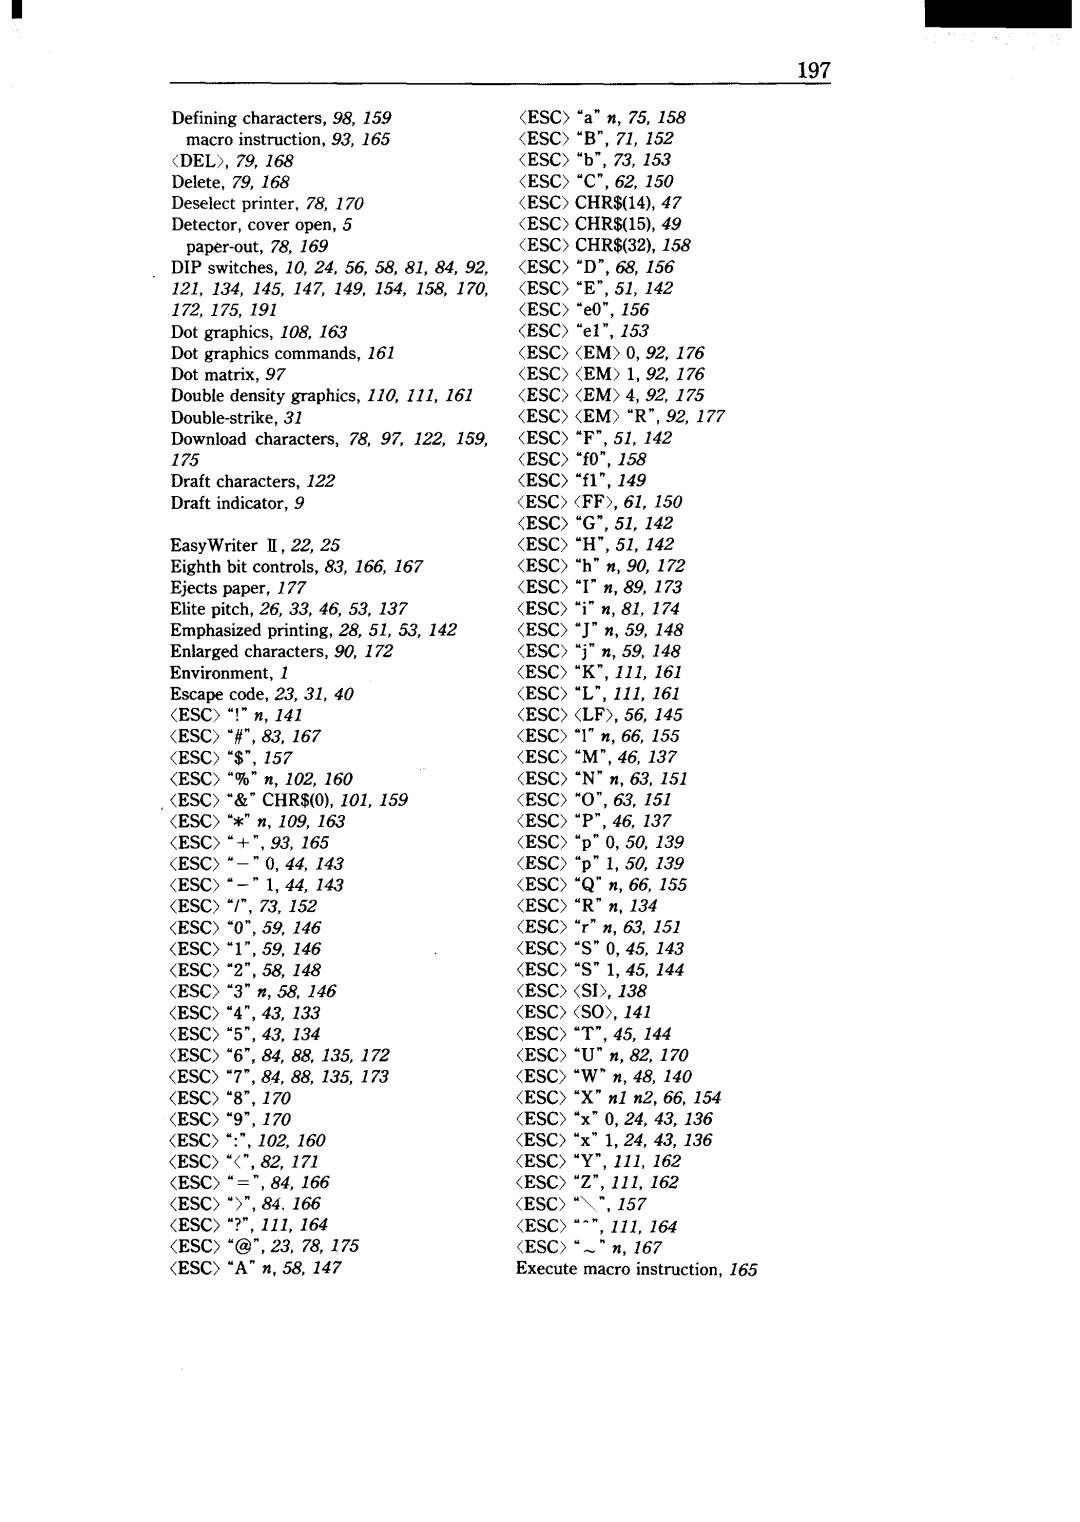 Star Micronics NX-15 user manual ESC “*” n, 109, ESC“6”,84, 88, 135, 172 ESC‘7”, 84, 88, 135 